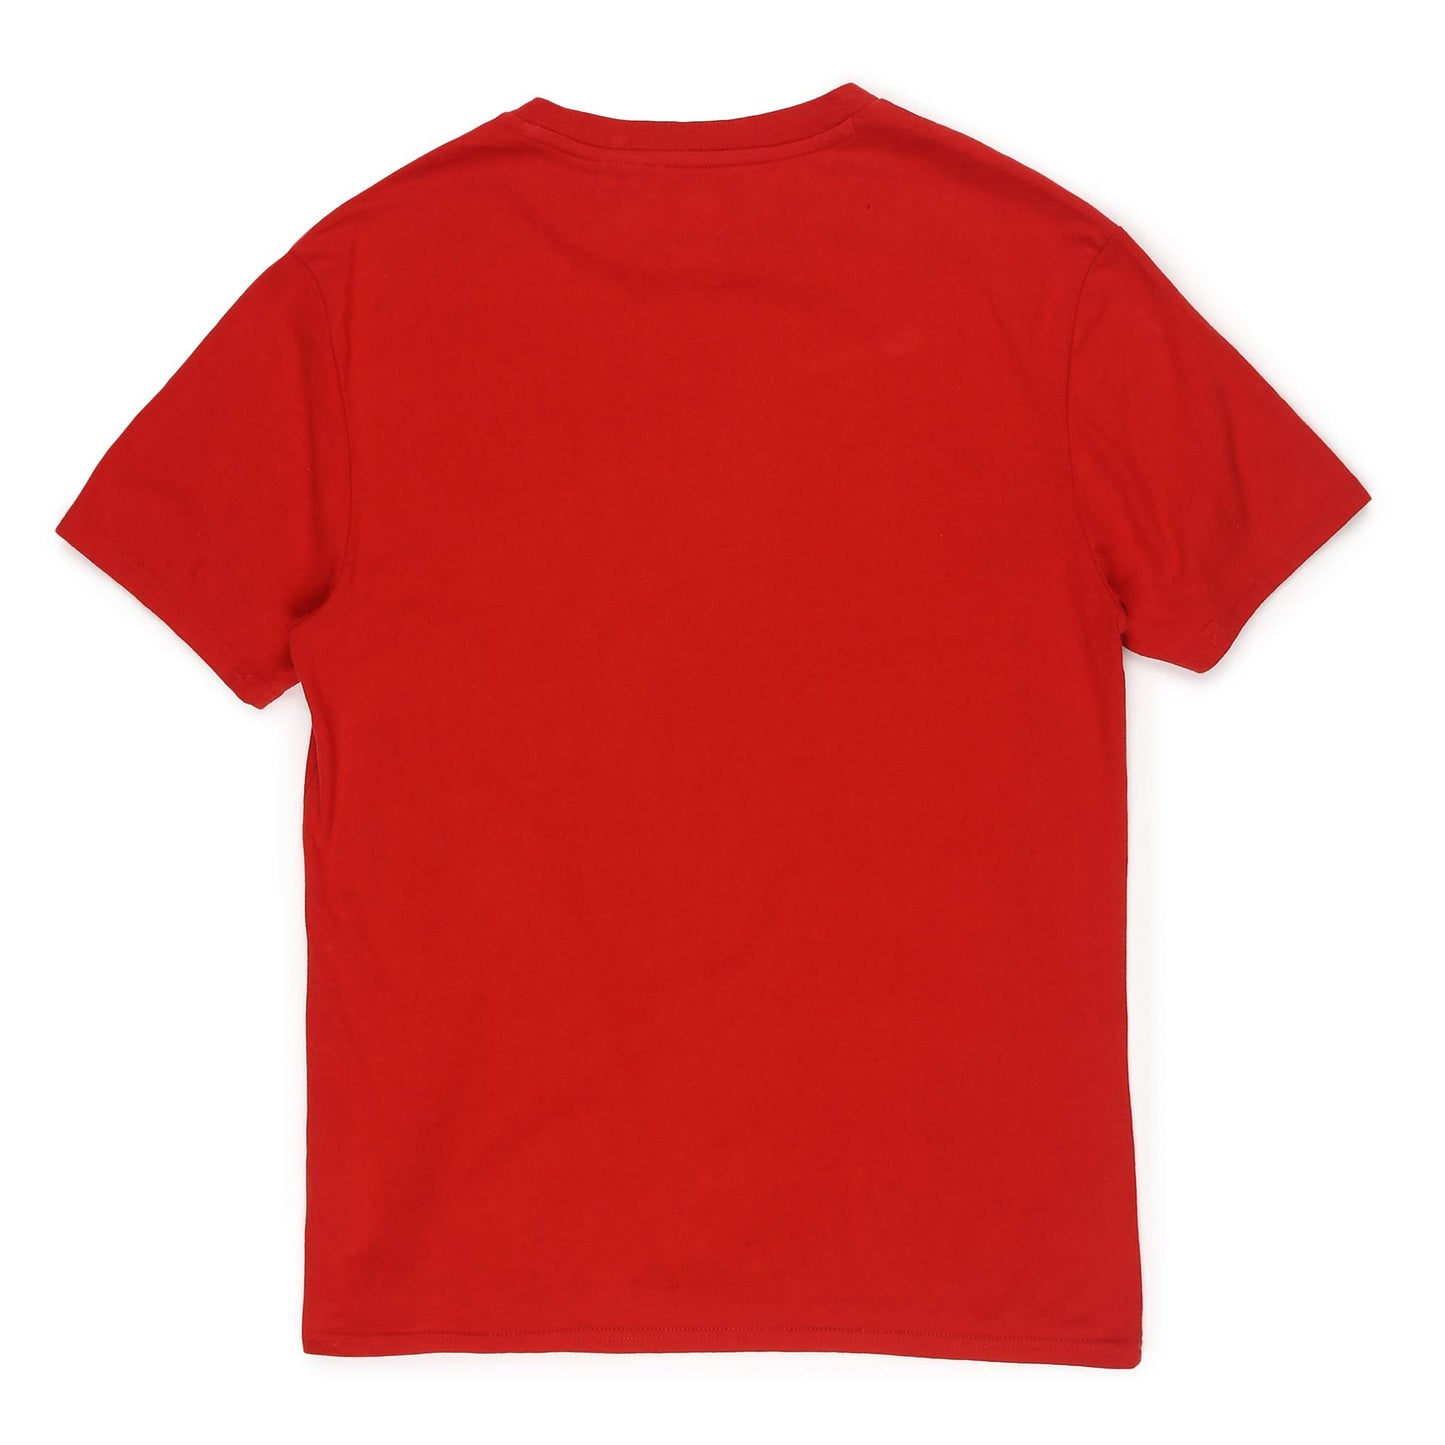 Royal Enfield X LEVI'S Like No One is Watching T-Shirt Red L (RLATSM000827)